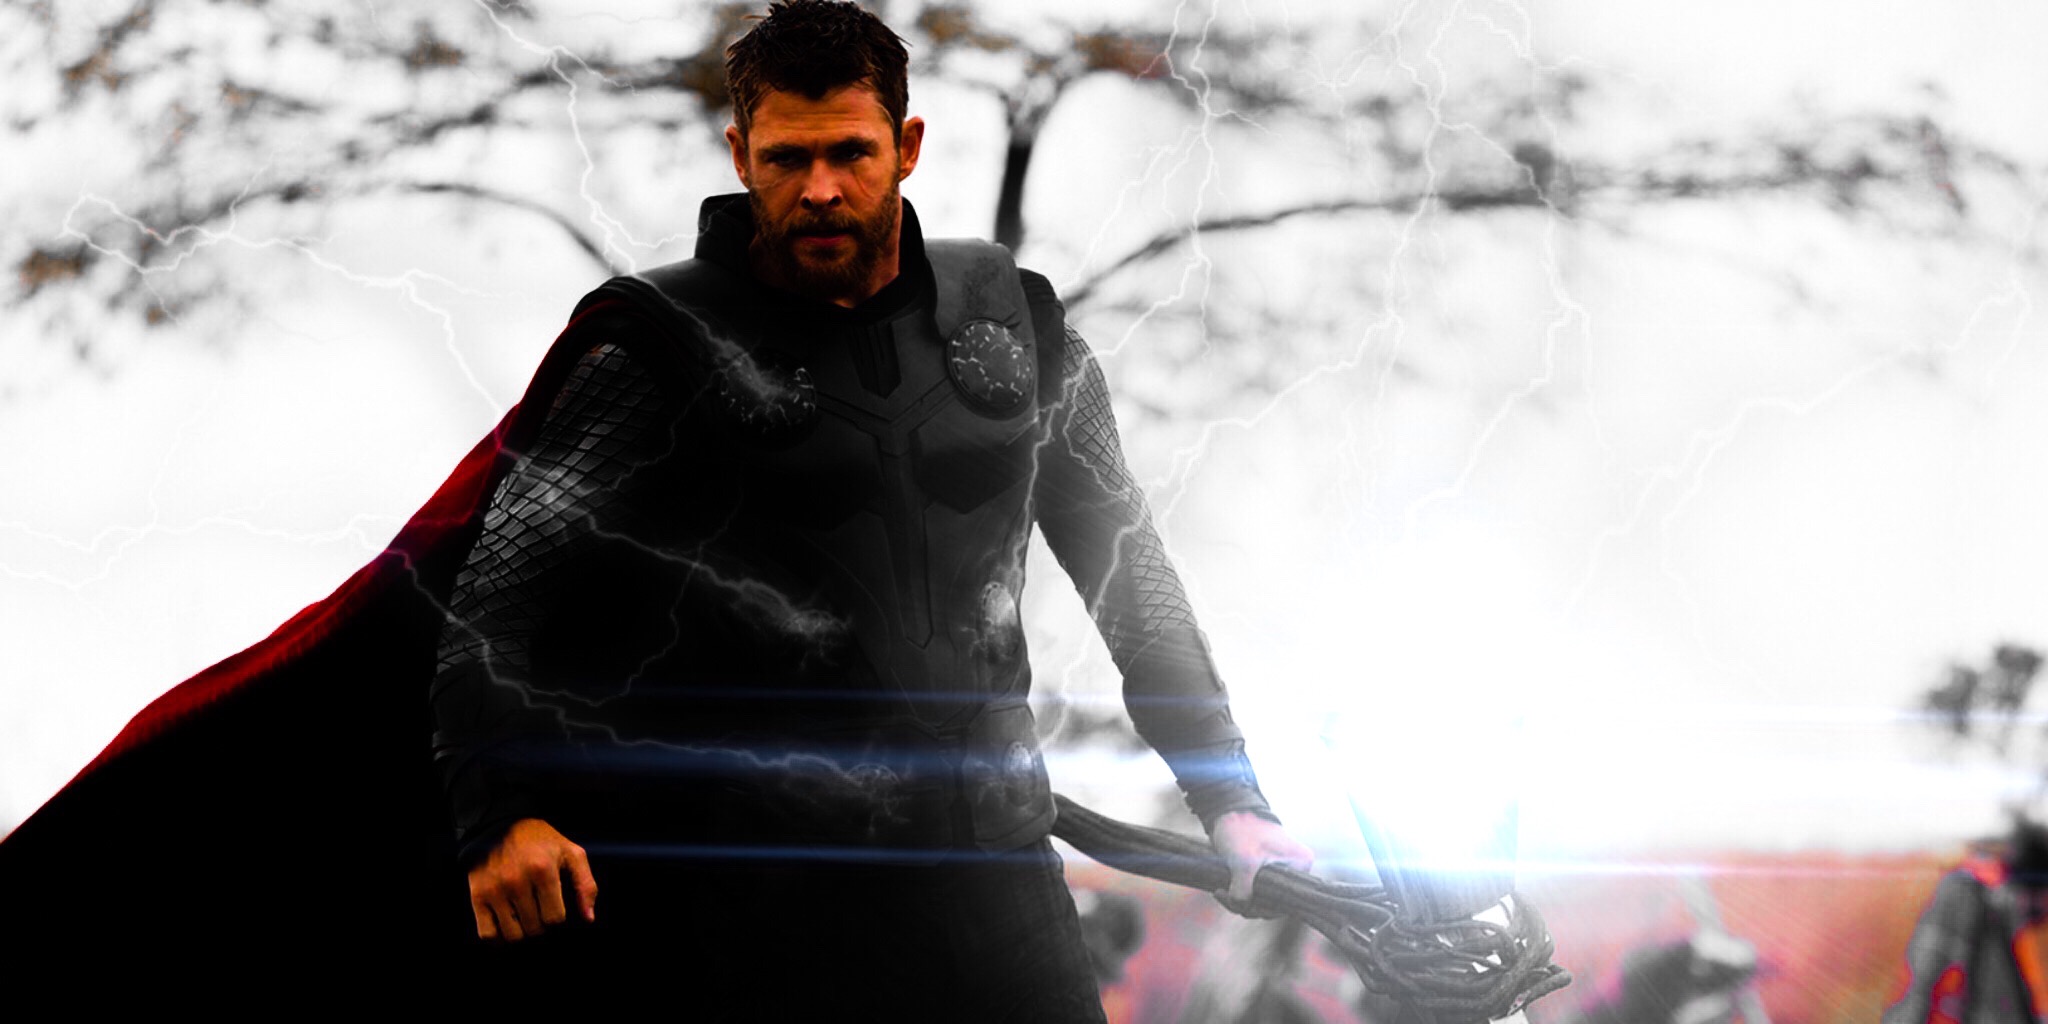 People 2048x1024 Chris Hemsworth Thor Avengers Endgame actor movies men